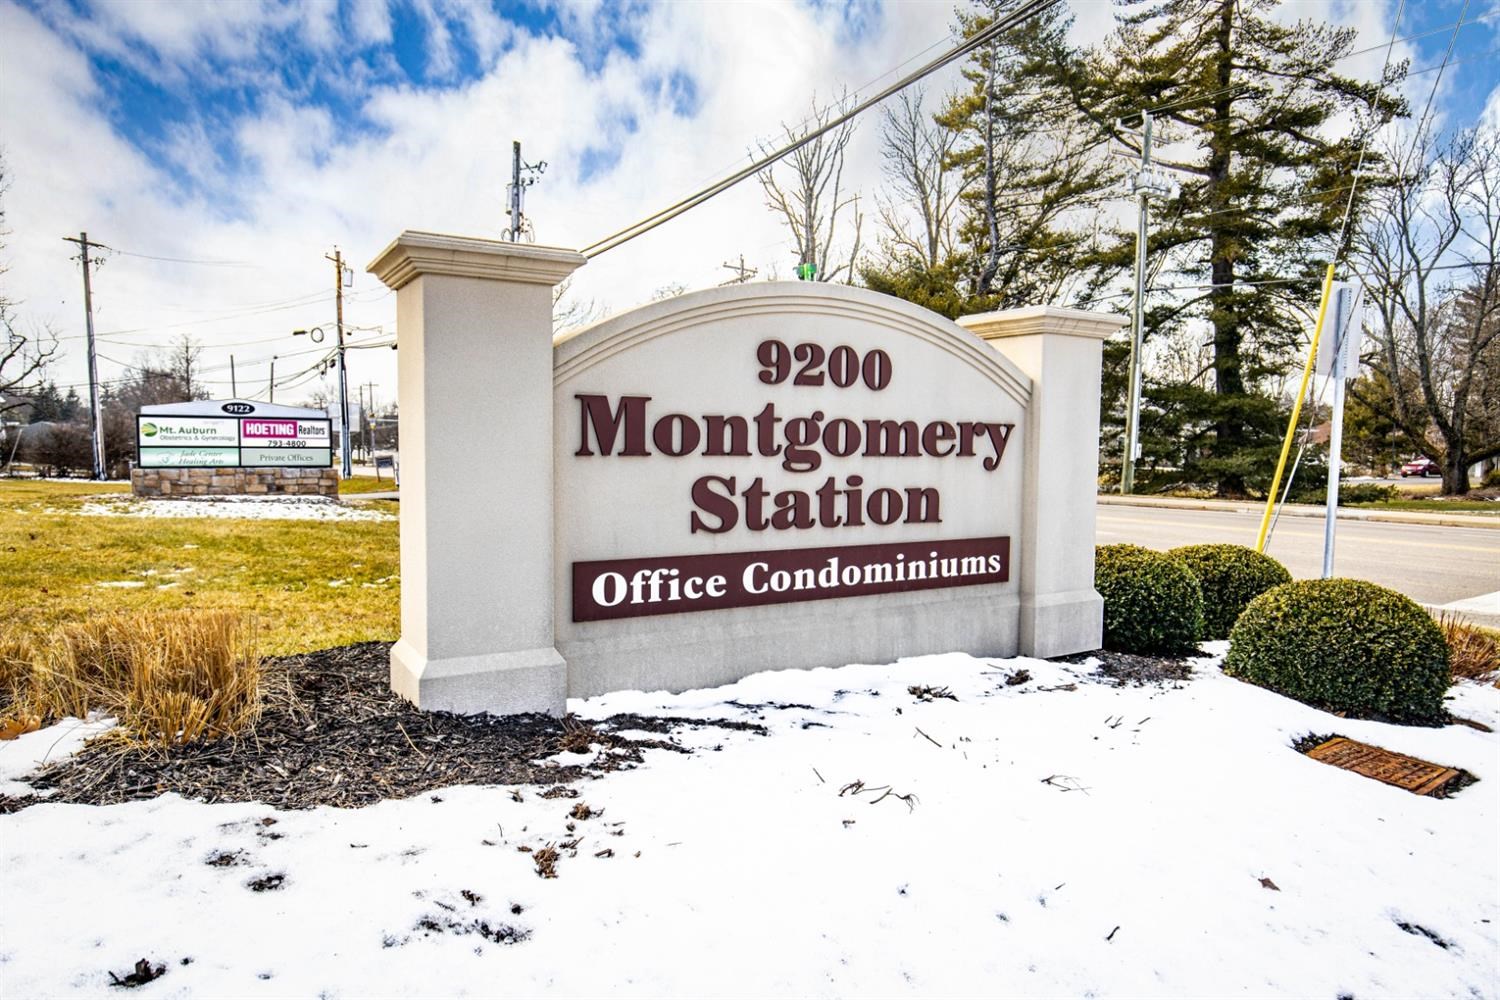 Sign for Montgomery Station, where Cincinnati Center for DBT is located in Cincinnati, Ohio